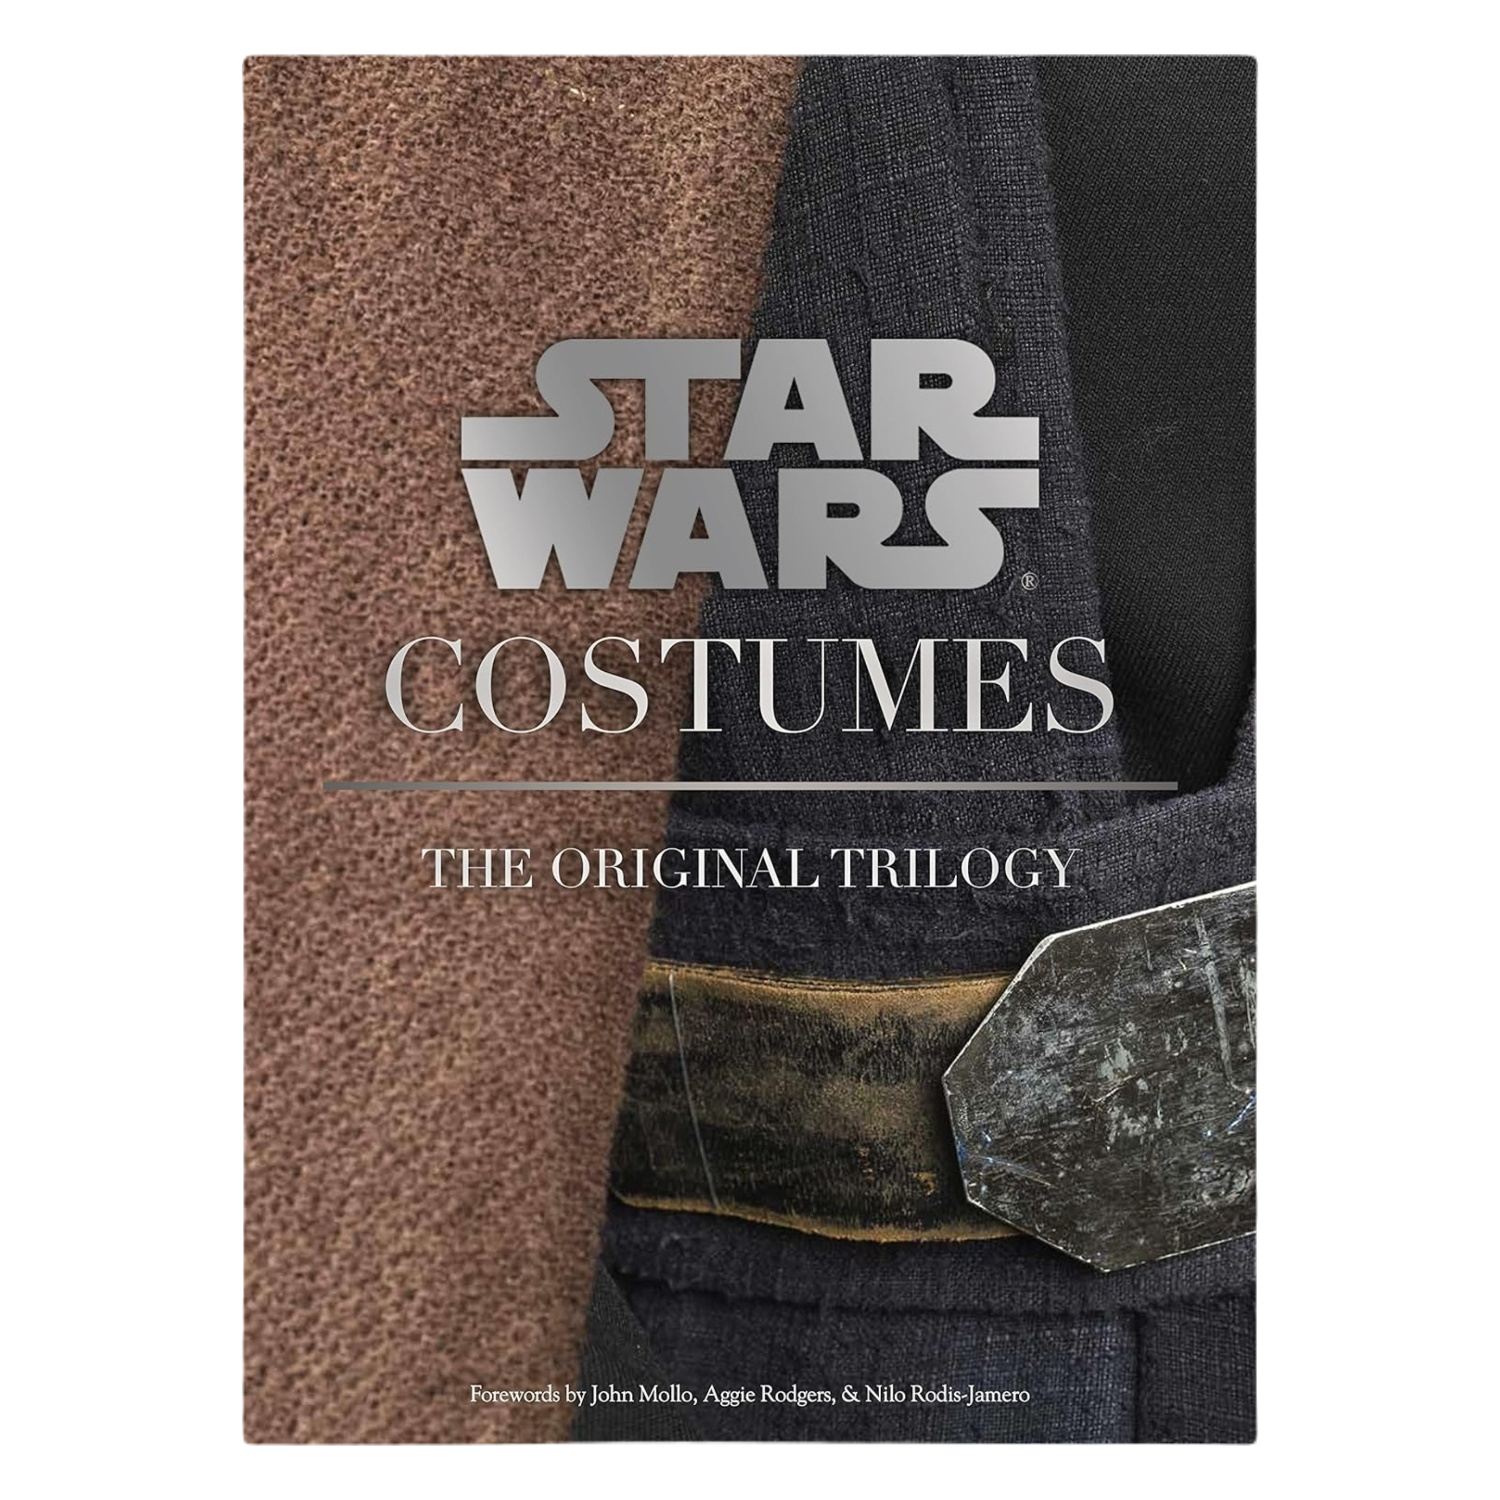 Star Wars Costumes: The Original Trilogy by Brandon Alinger (2014)